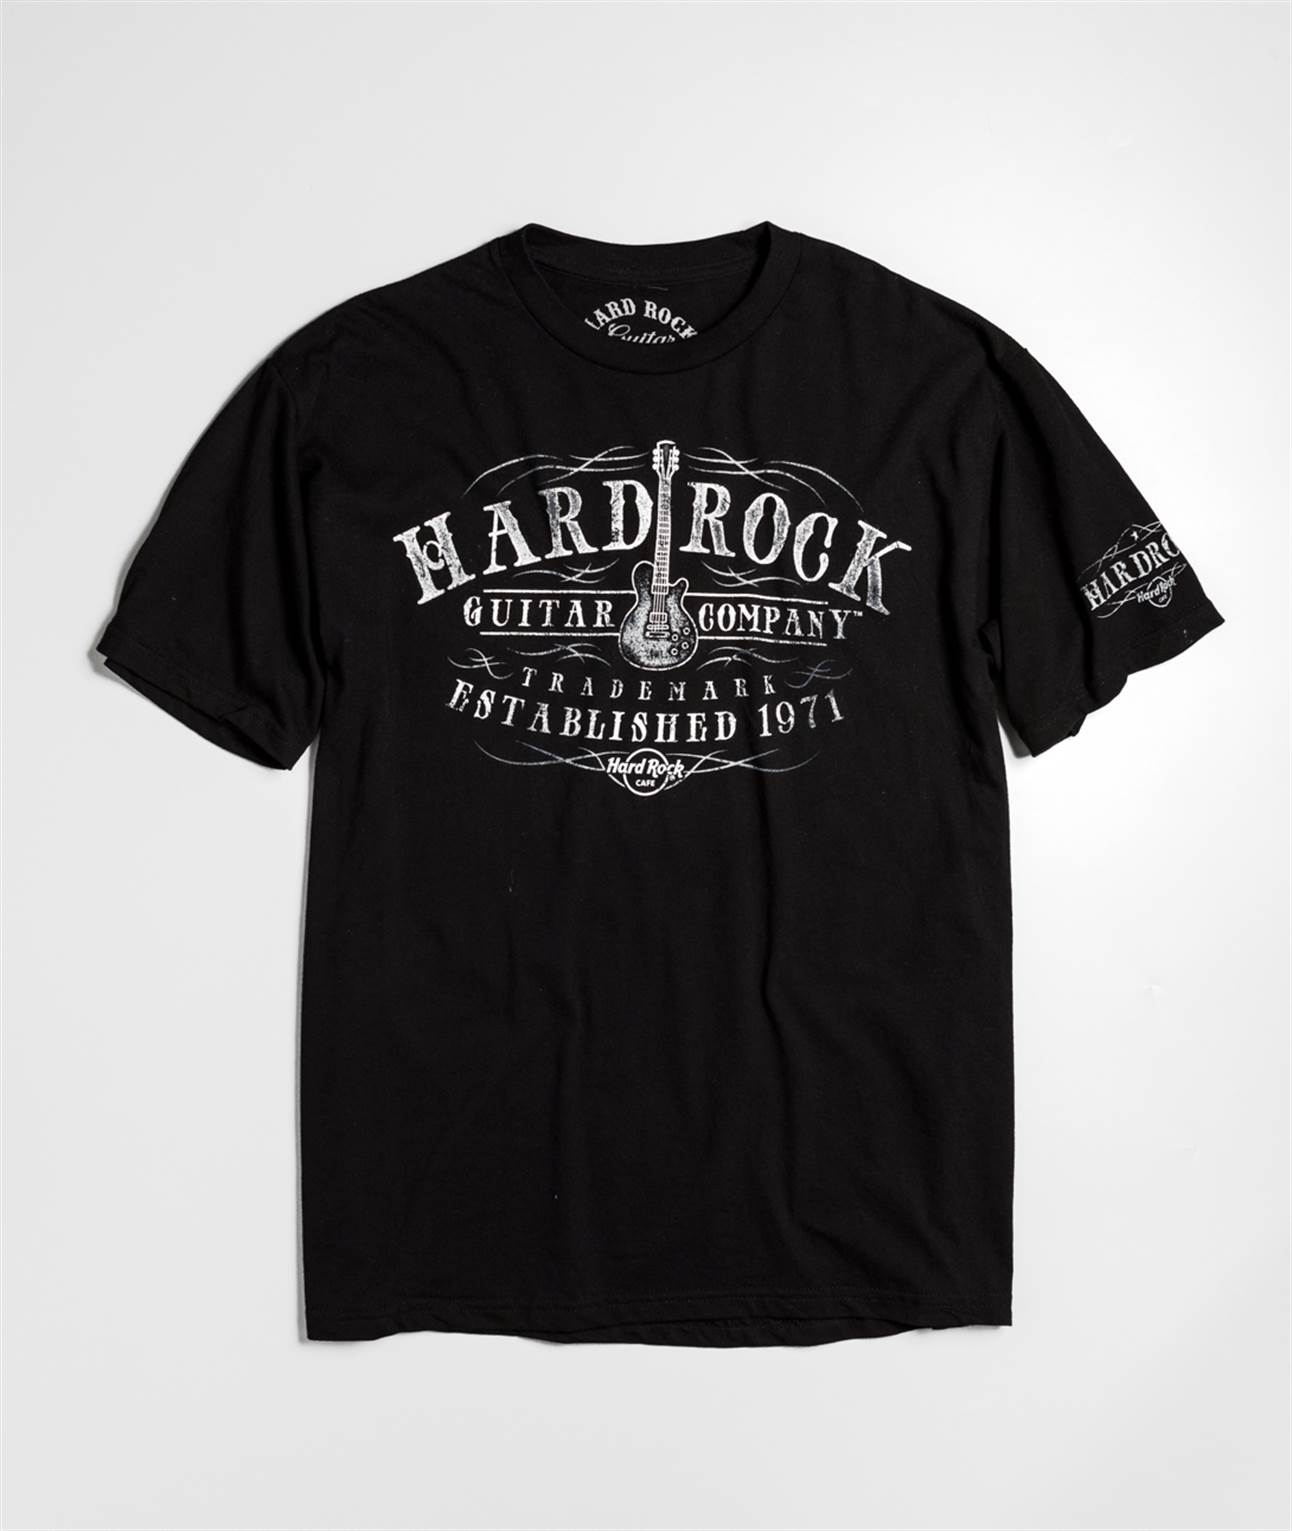 Hard rock cafe köln t shirt preis